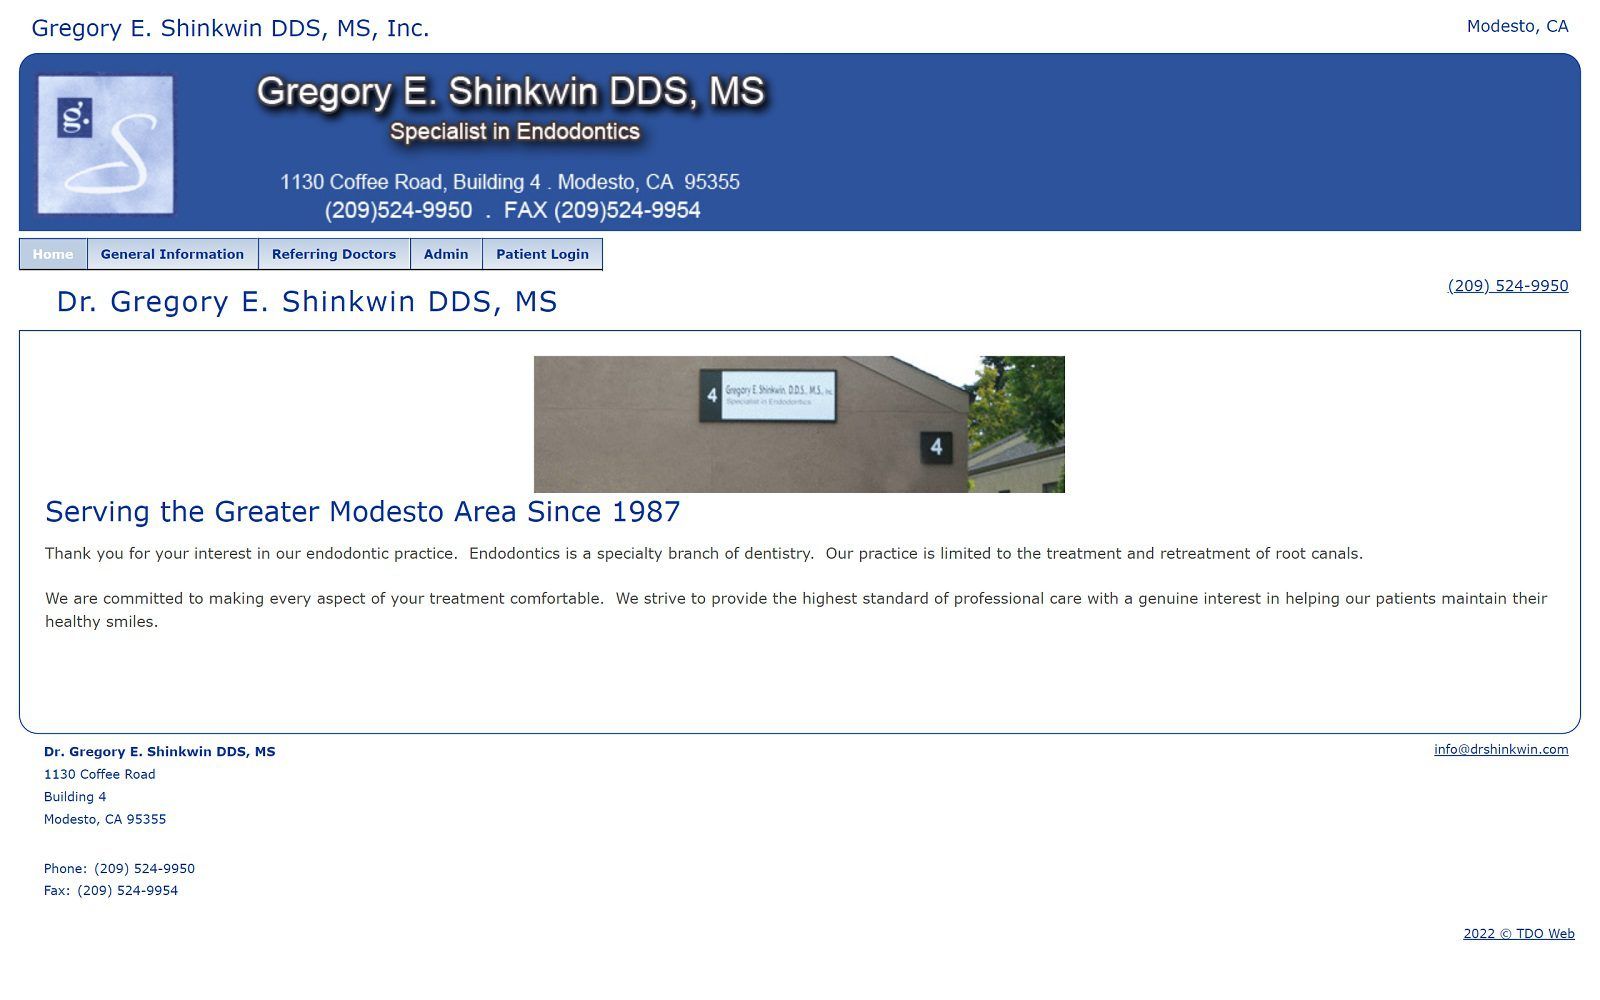 The screenshot of dr. Gregory e. Shinkwin, dds, ms website